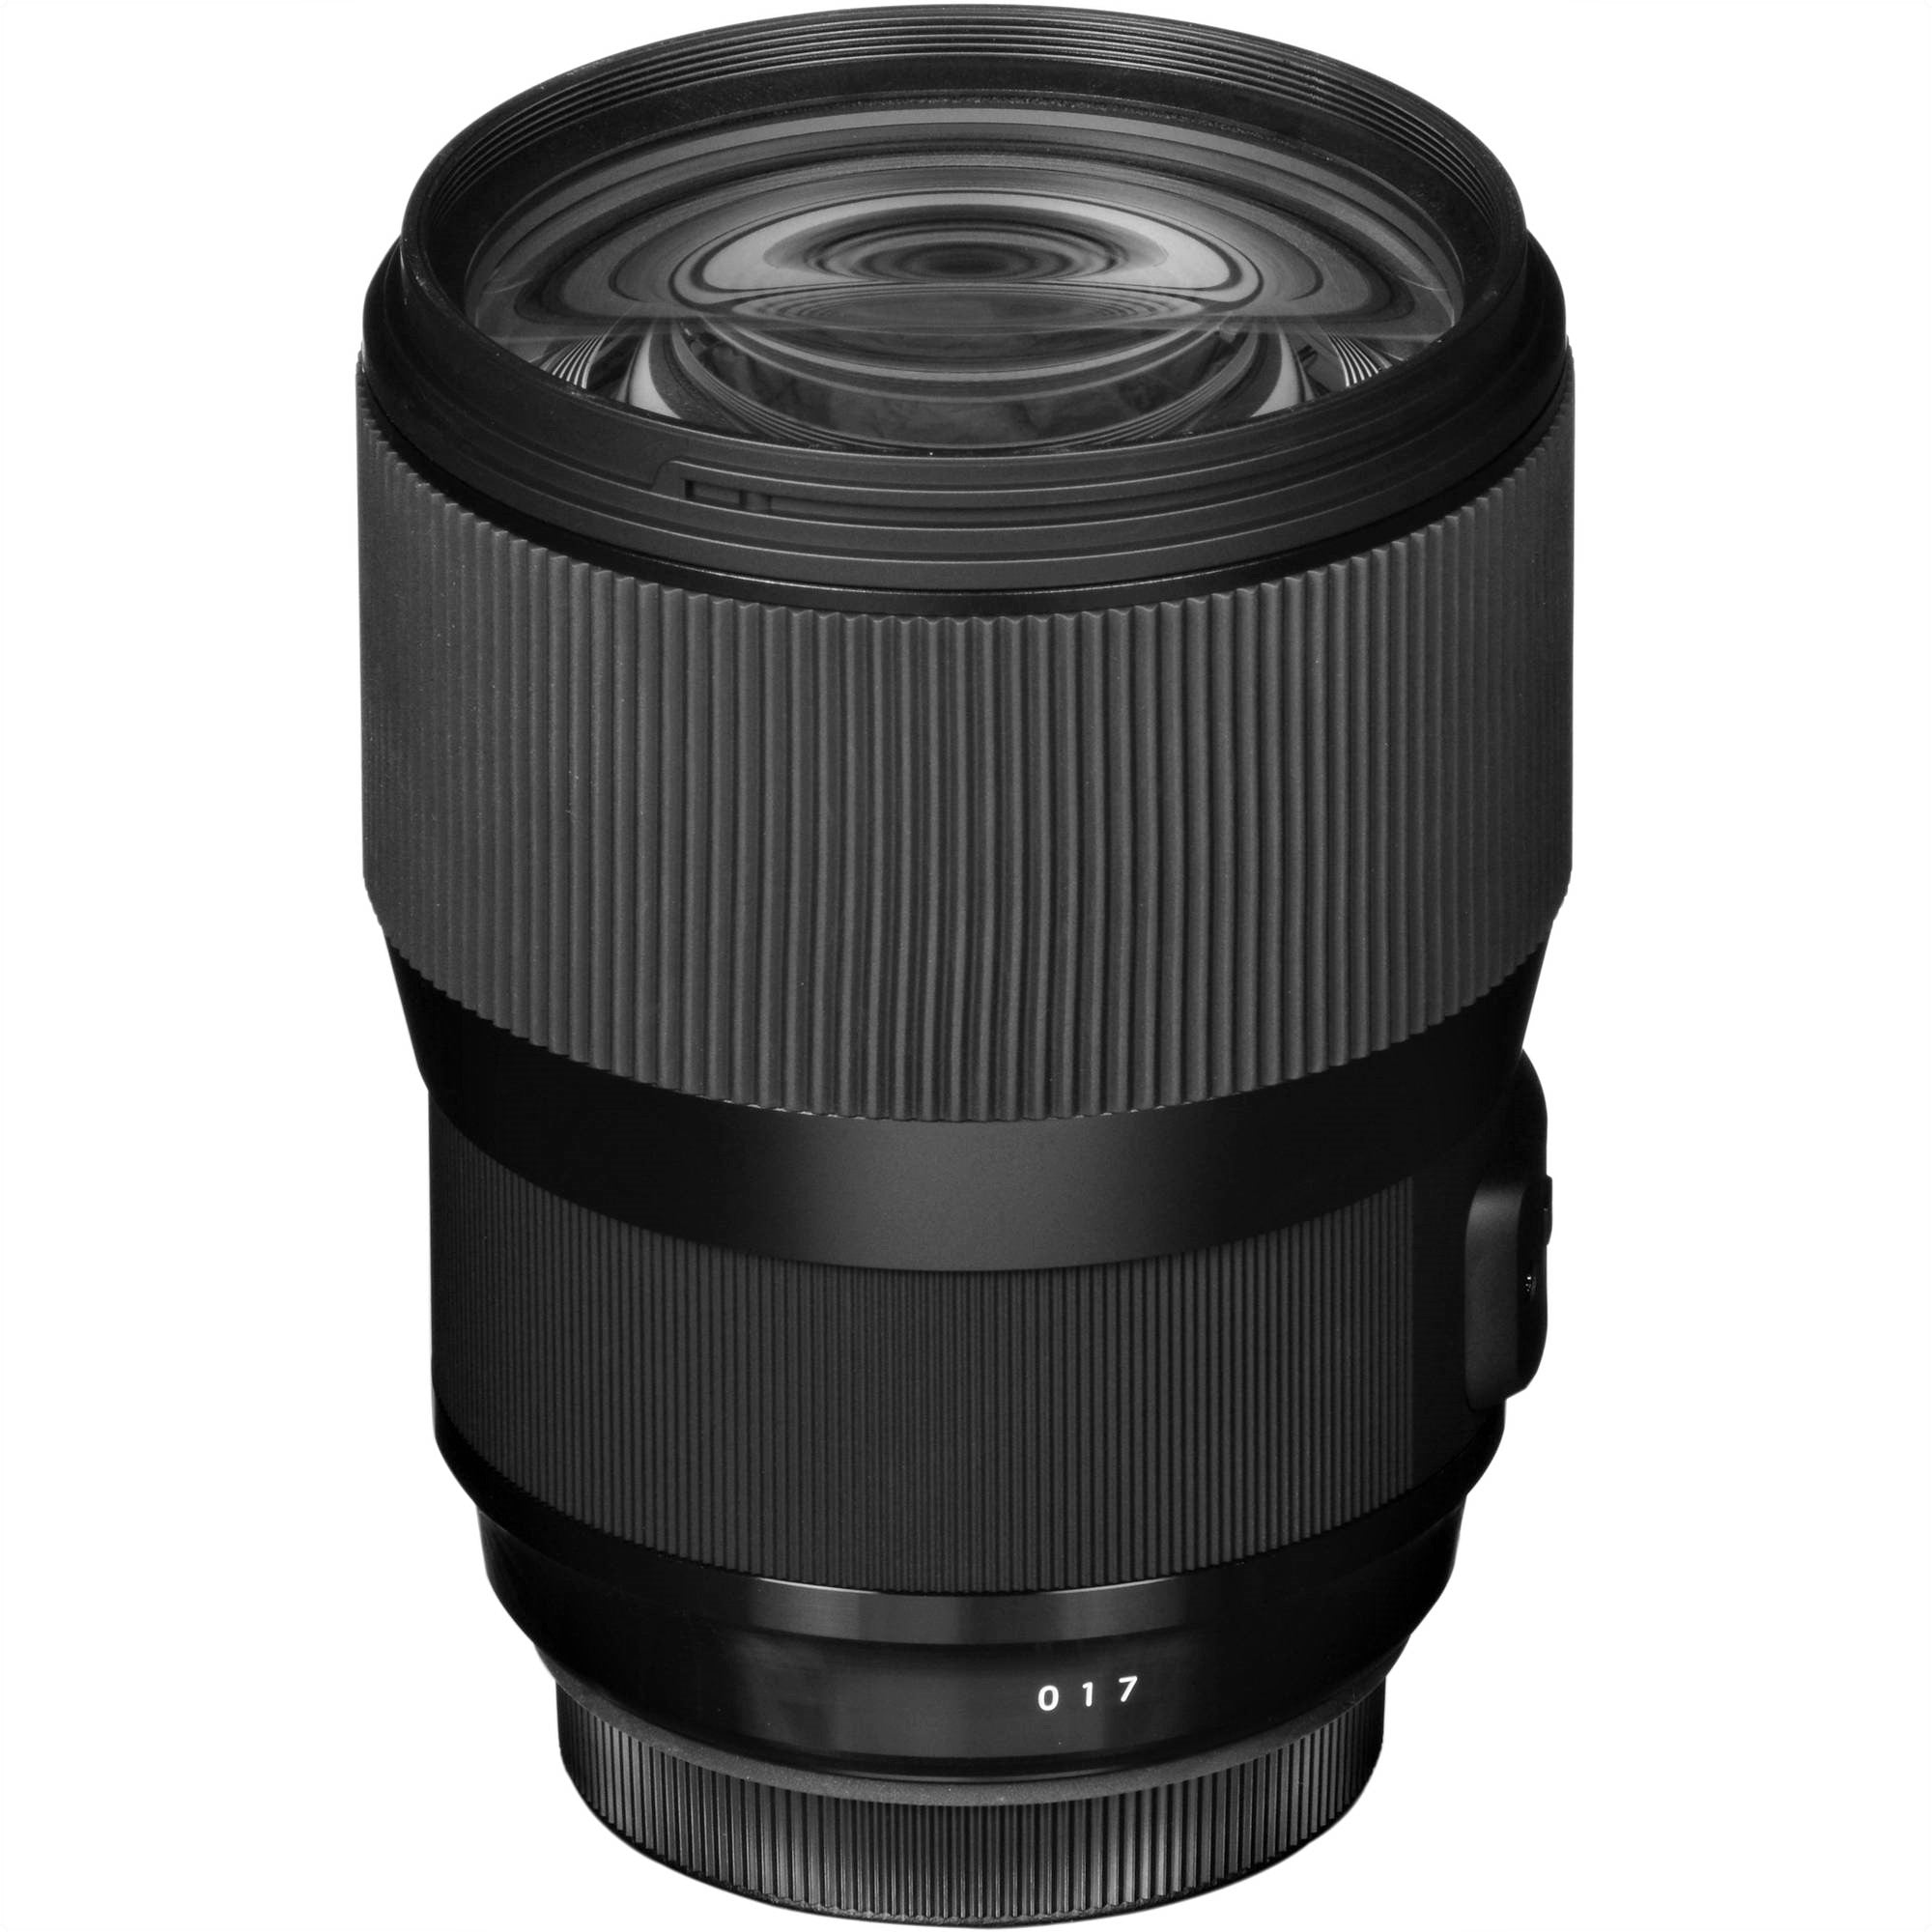 Sigma 135mm F1.8 DG HSM Art Lens for Nikon F